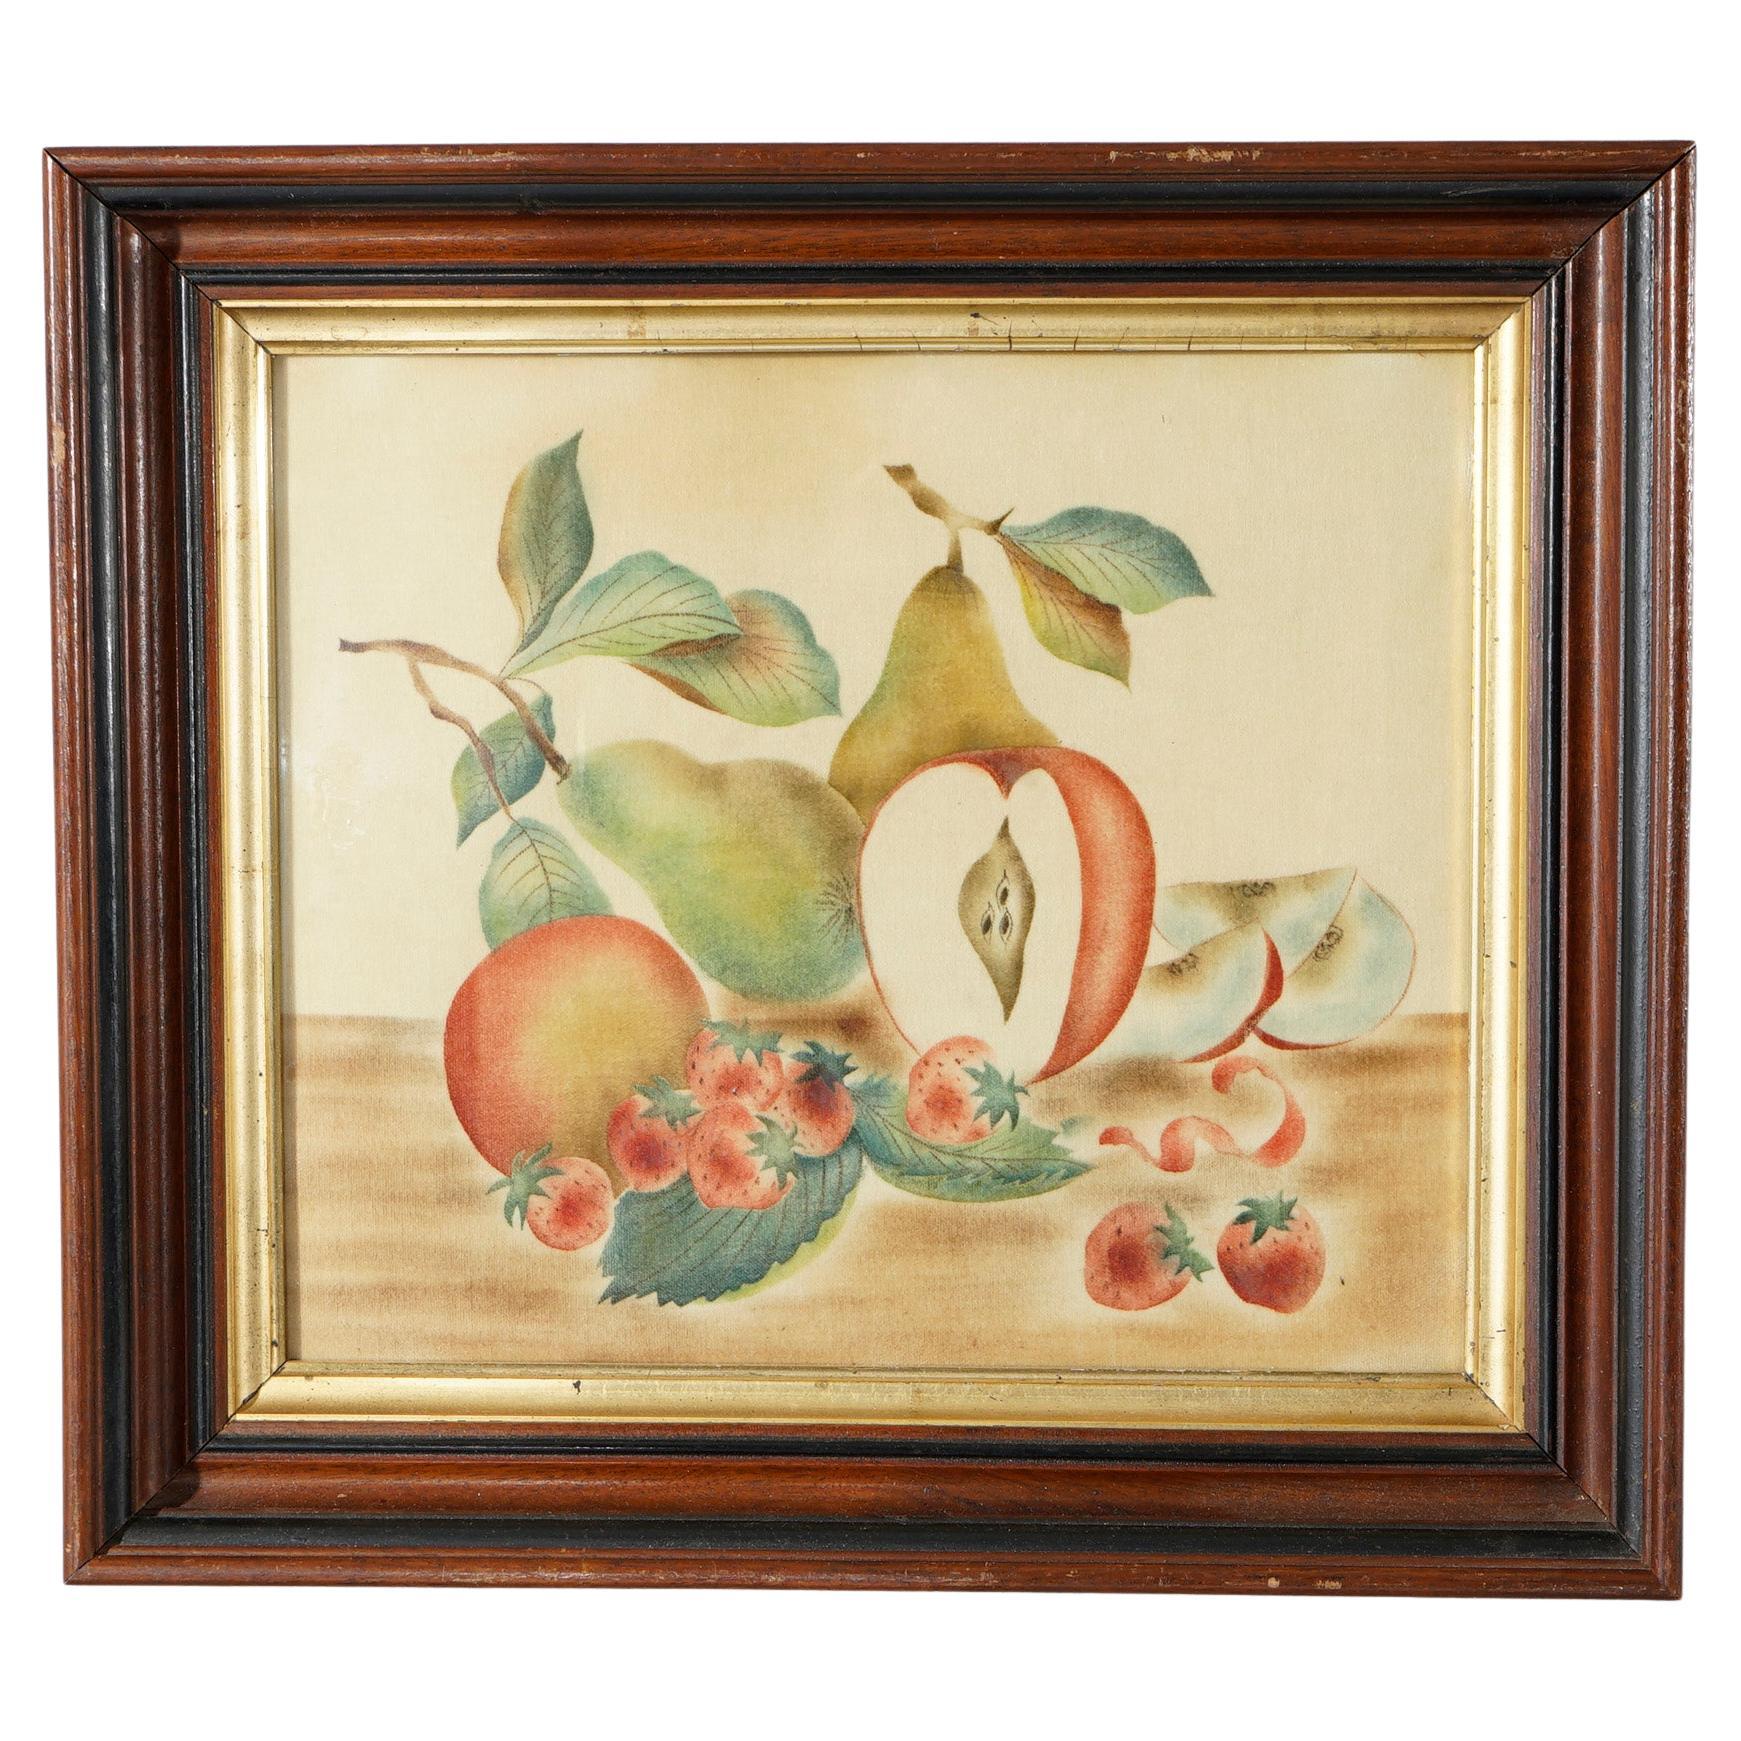 Antique Victorian Theorem Fruit Still Life Painting on Velvet, Framed, 19th C.